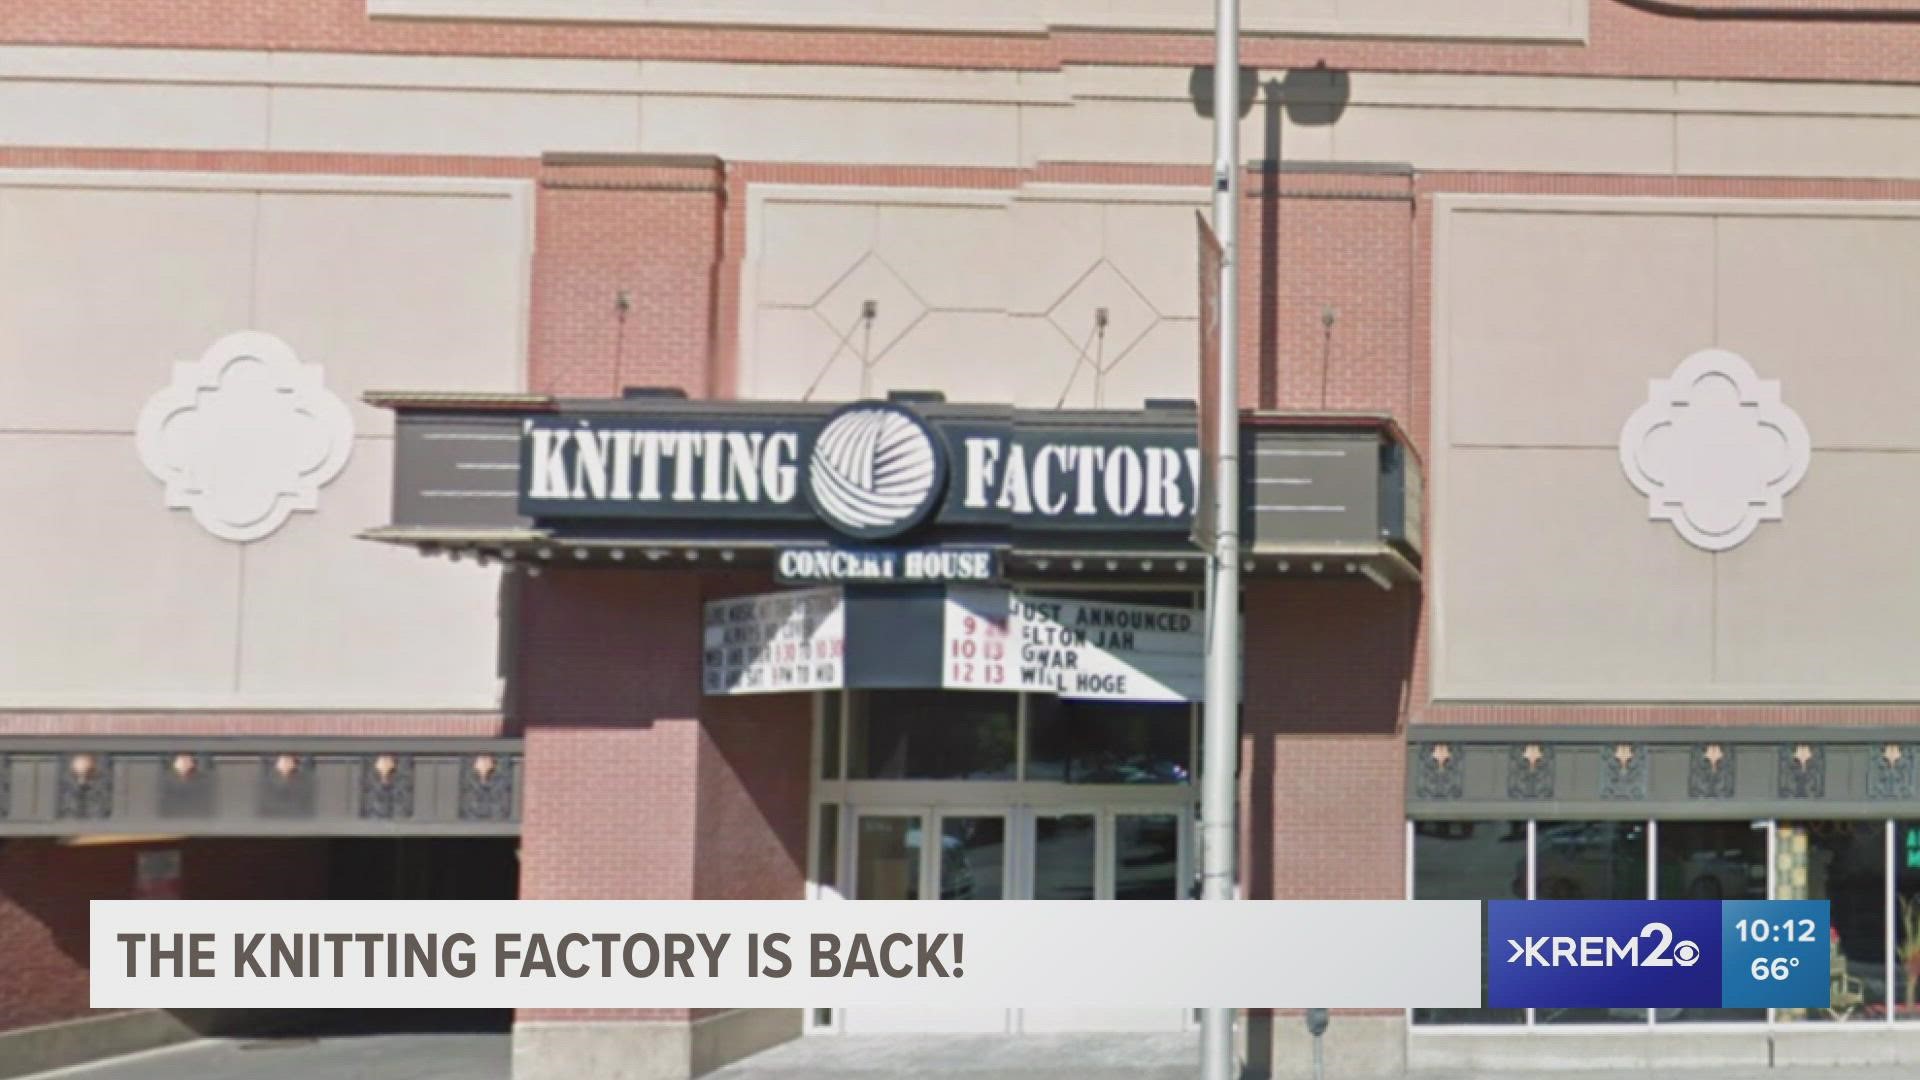 Spokane Knitting Factory live concert music venue reopening